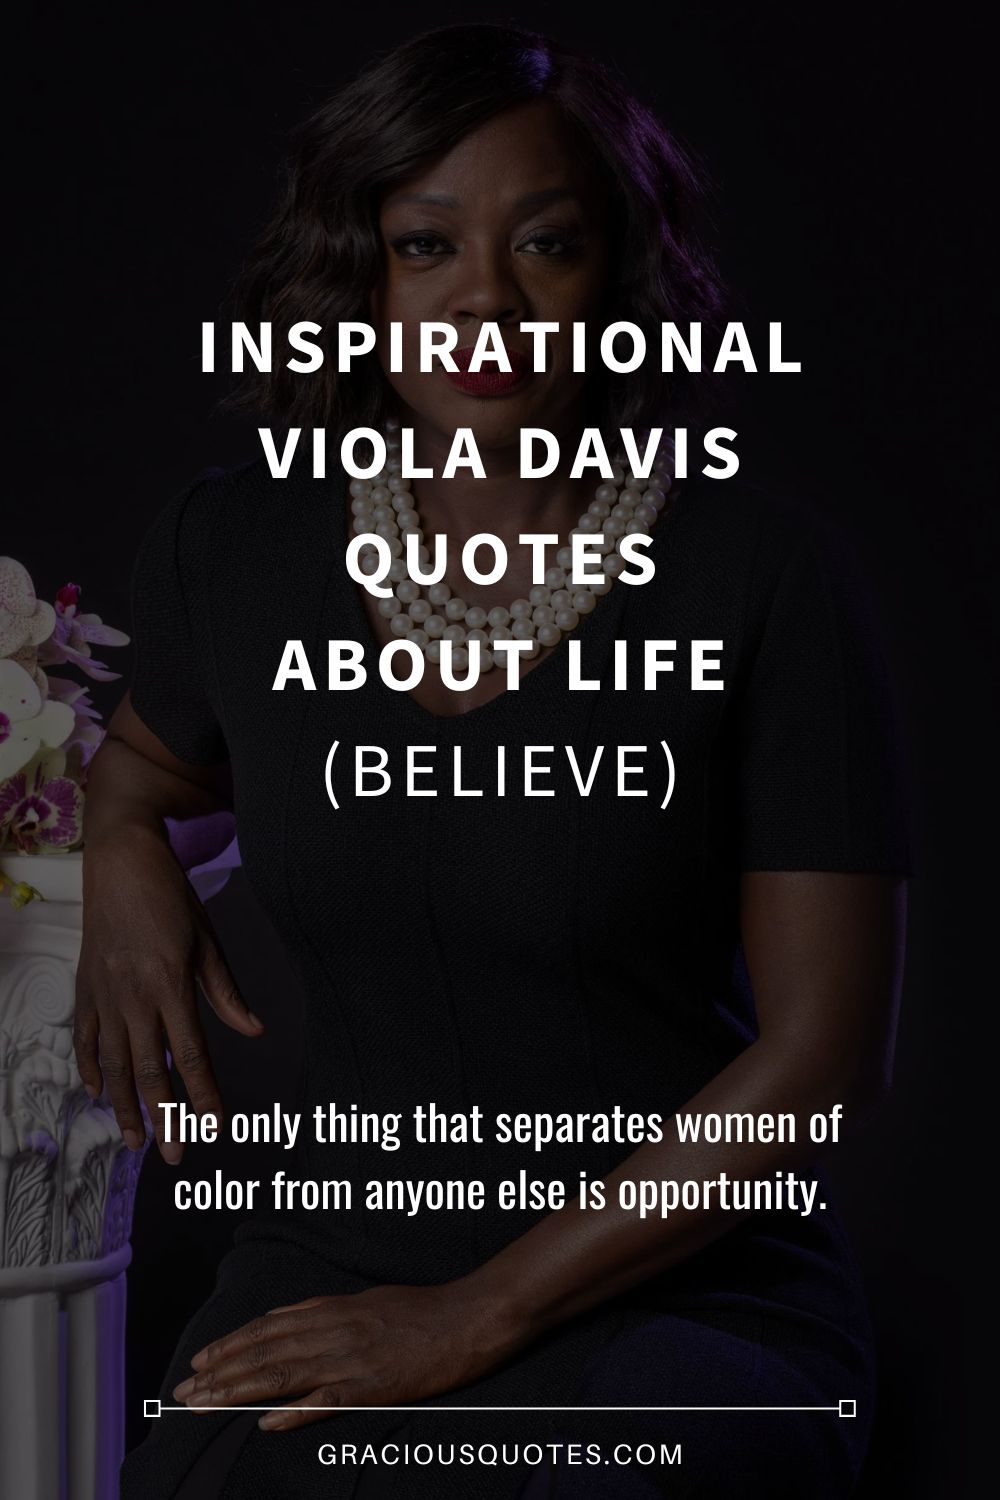 Inspirational Viola Davis Quotes About Life (BELIEVE) - Gracious Quotes